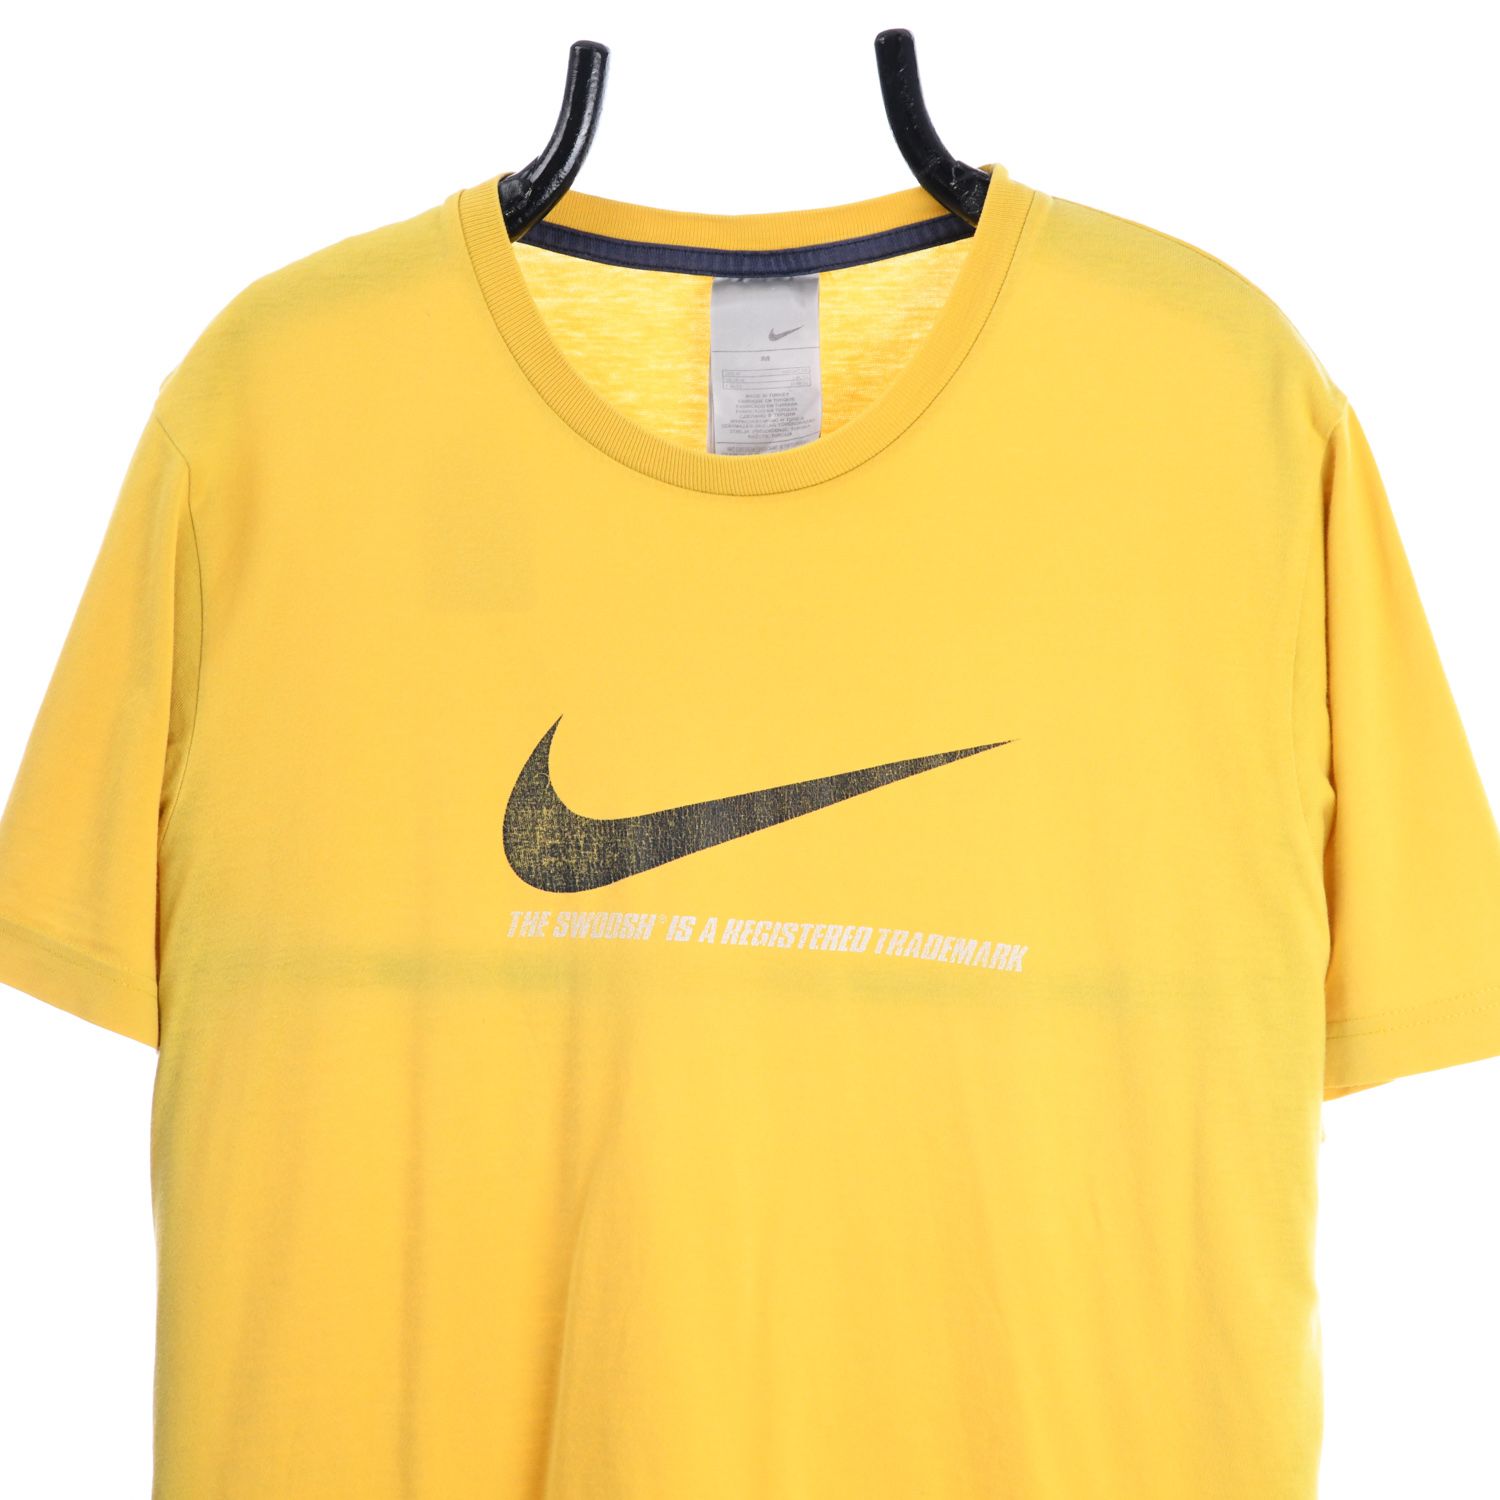 Nike Early 2000s T-Shirt